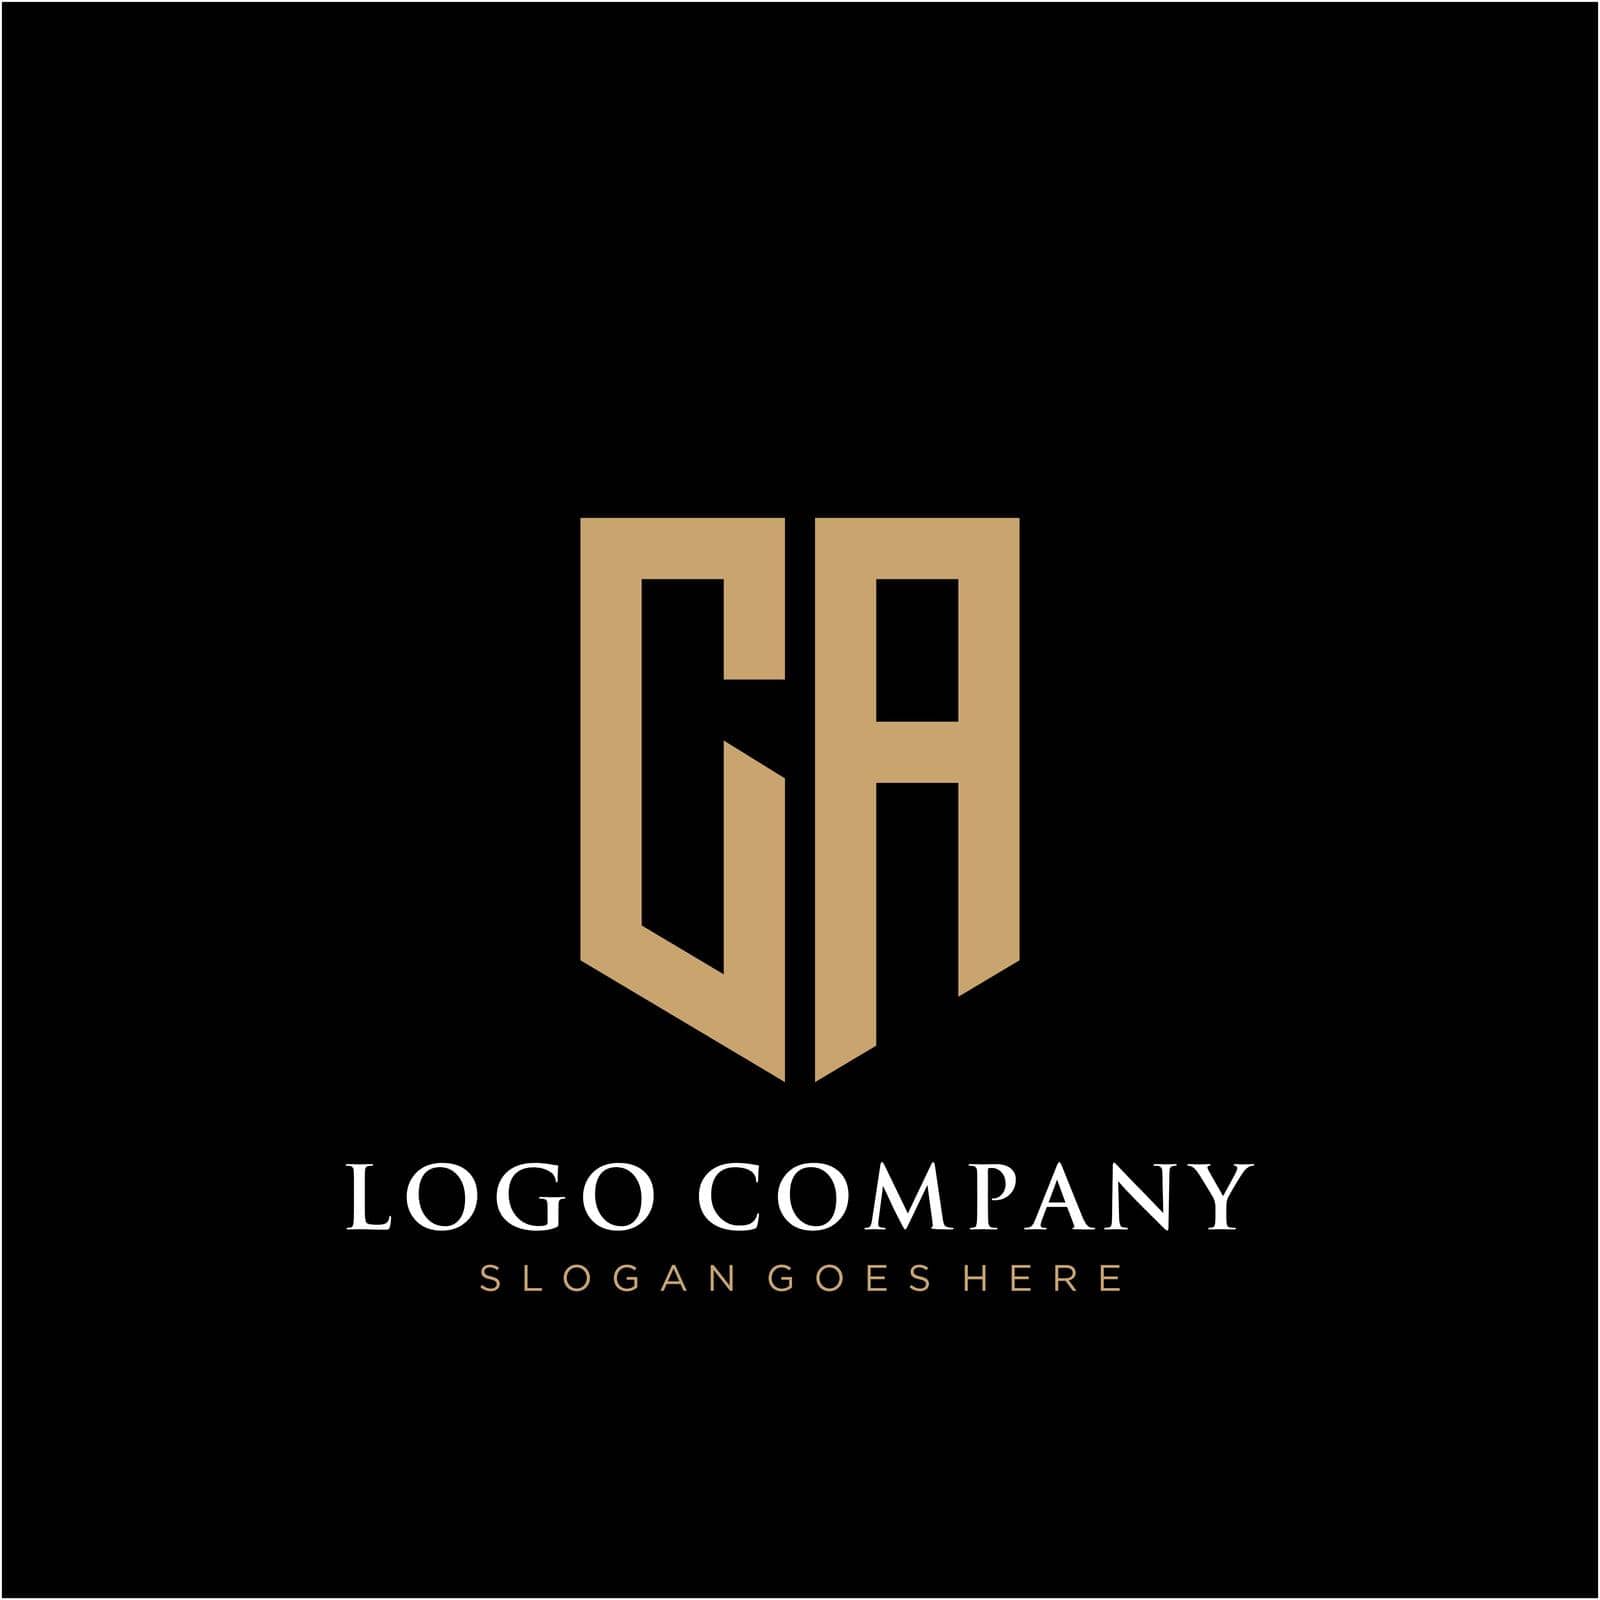 CA Letter logo icon design template elements by liaanniesatul